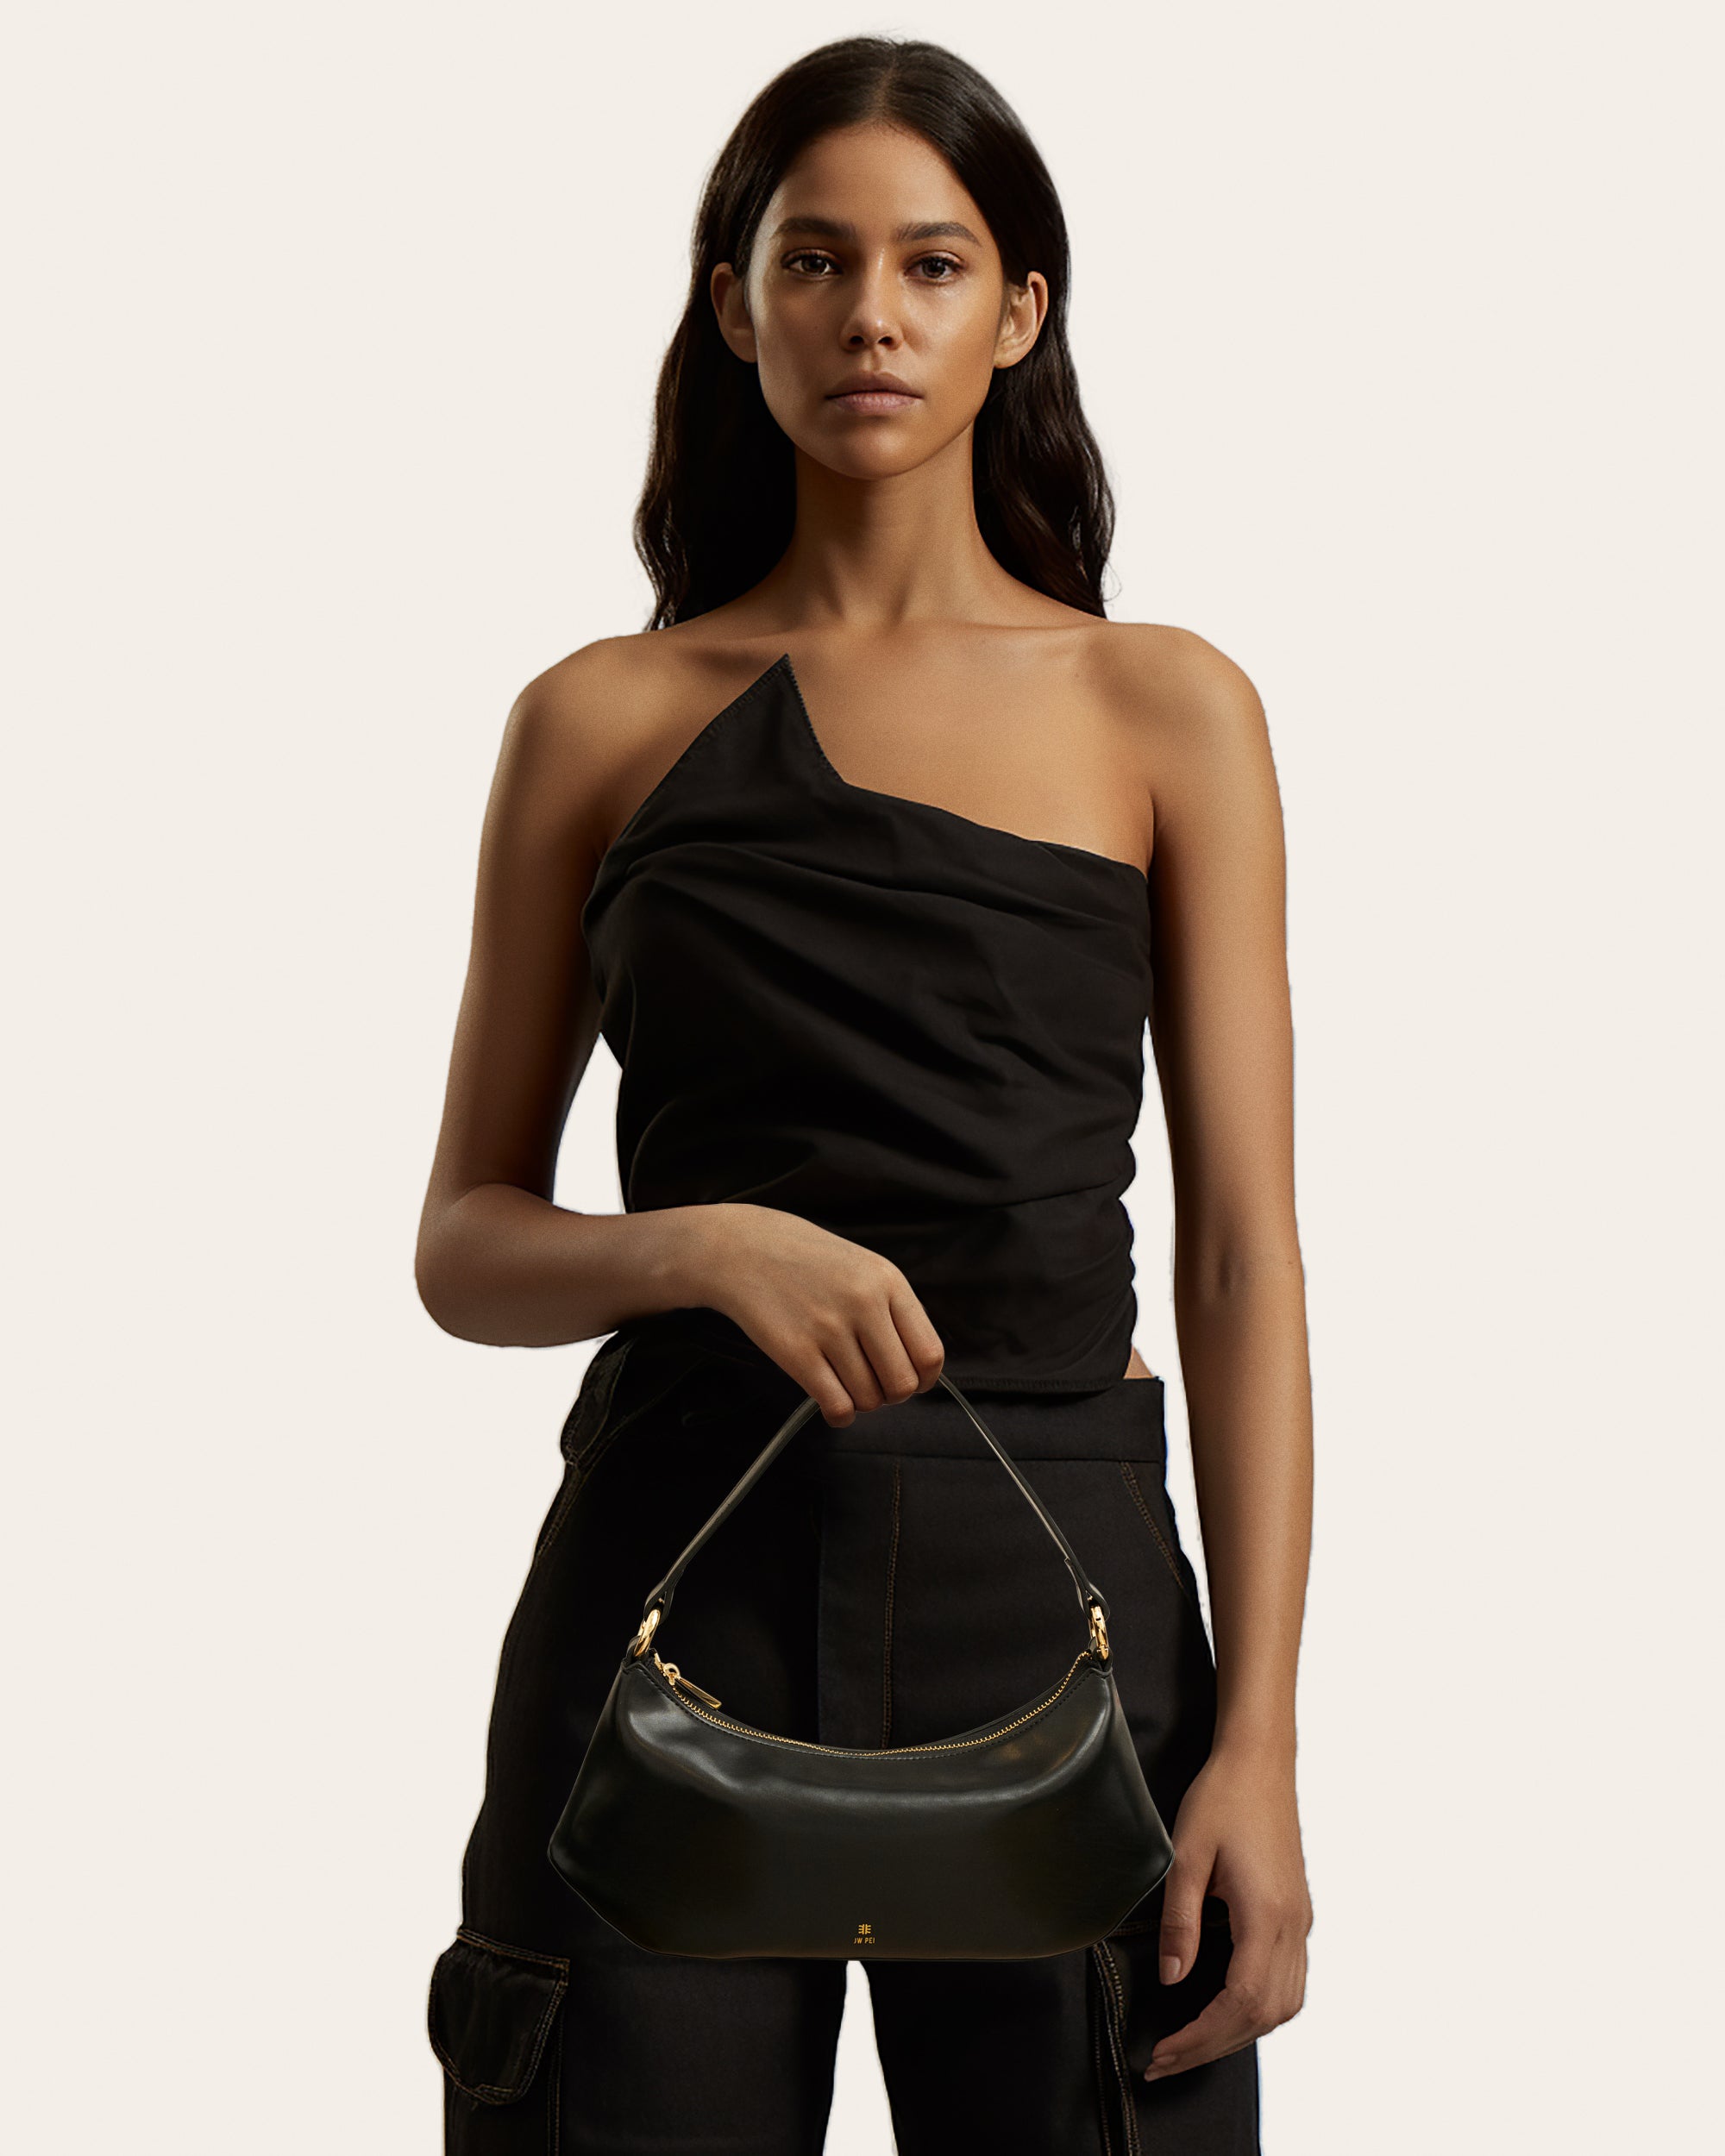 JW Pei Gabbi Vegan Bag (Black), Luxury, Bags & Wallets on Carousell